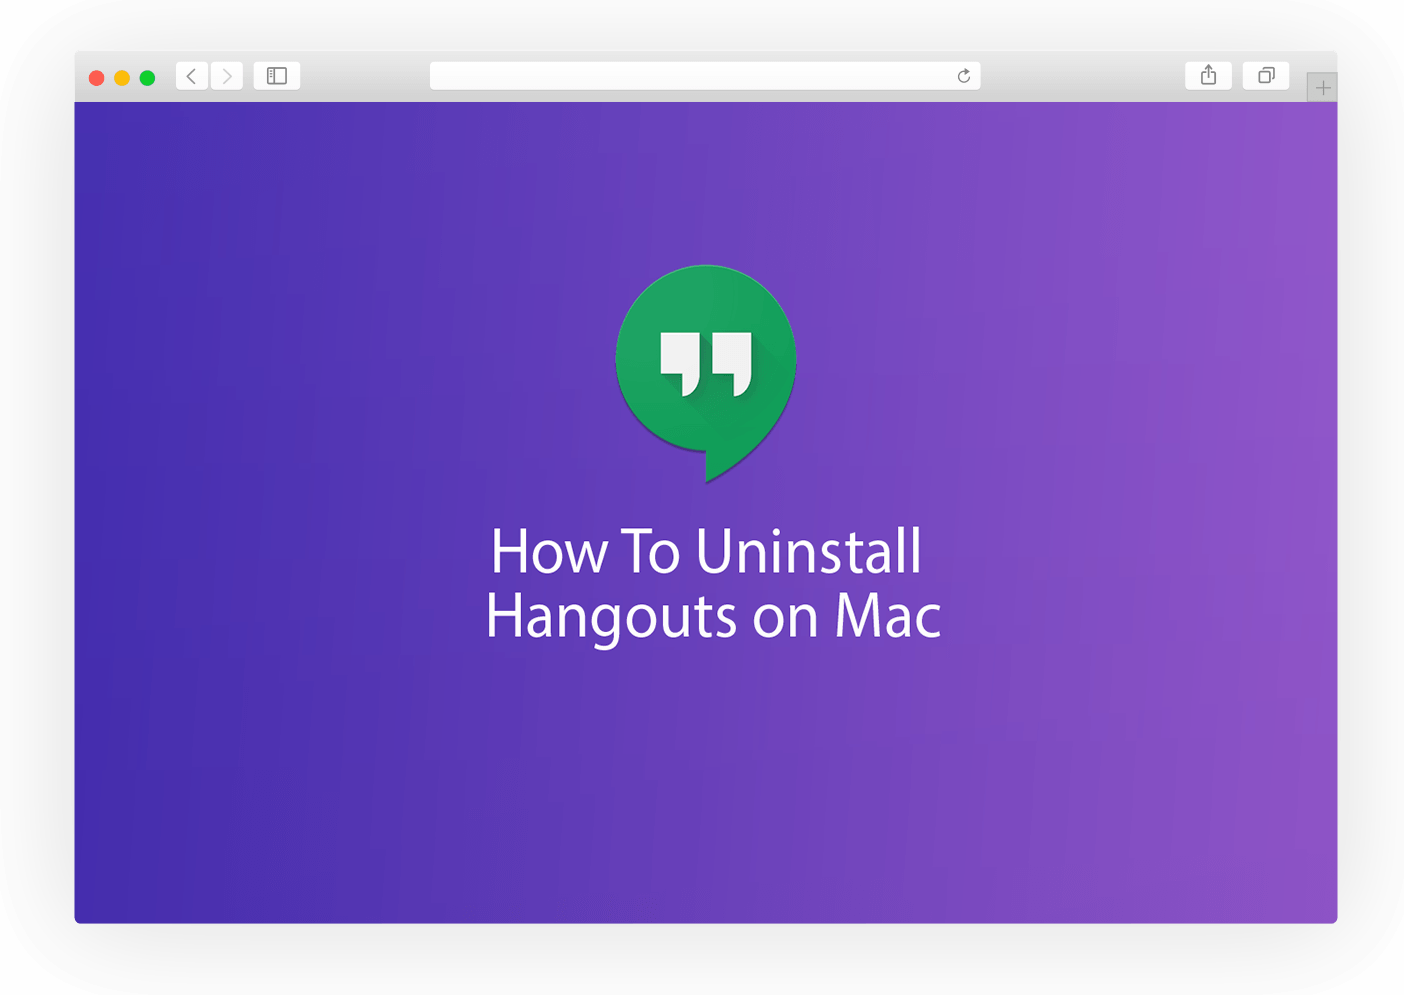 hangouts app on mac change user